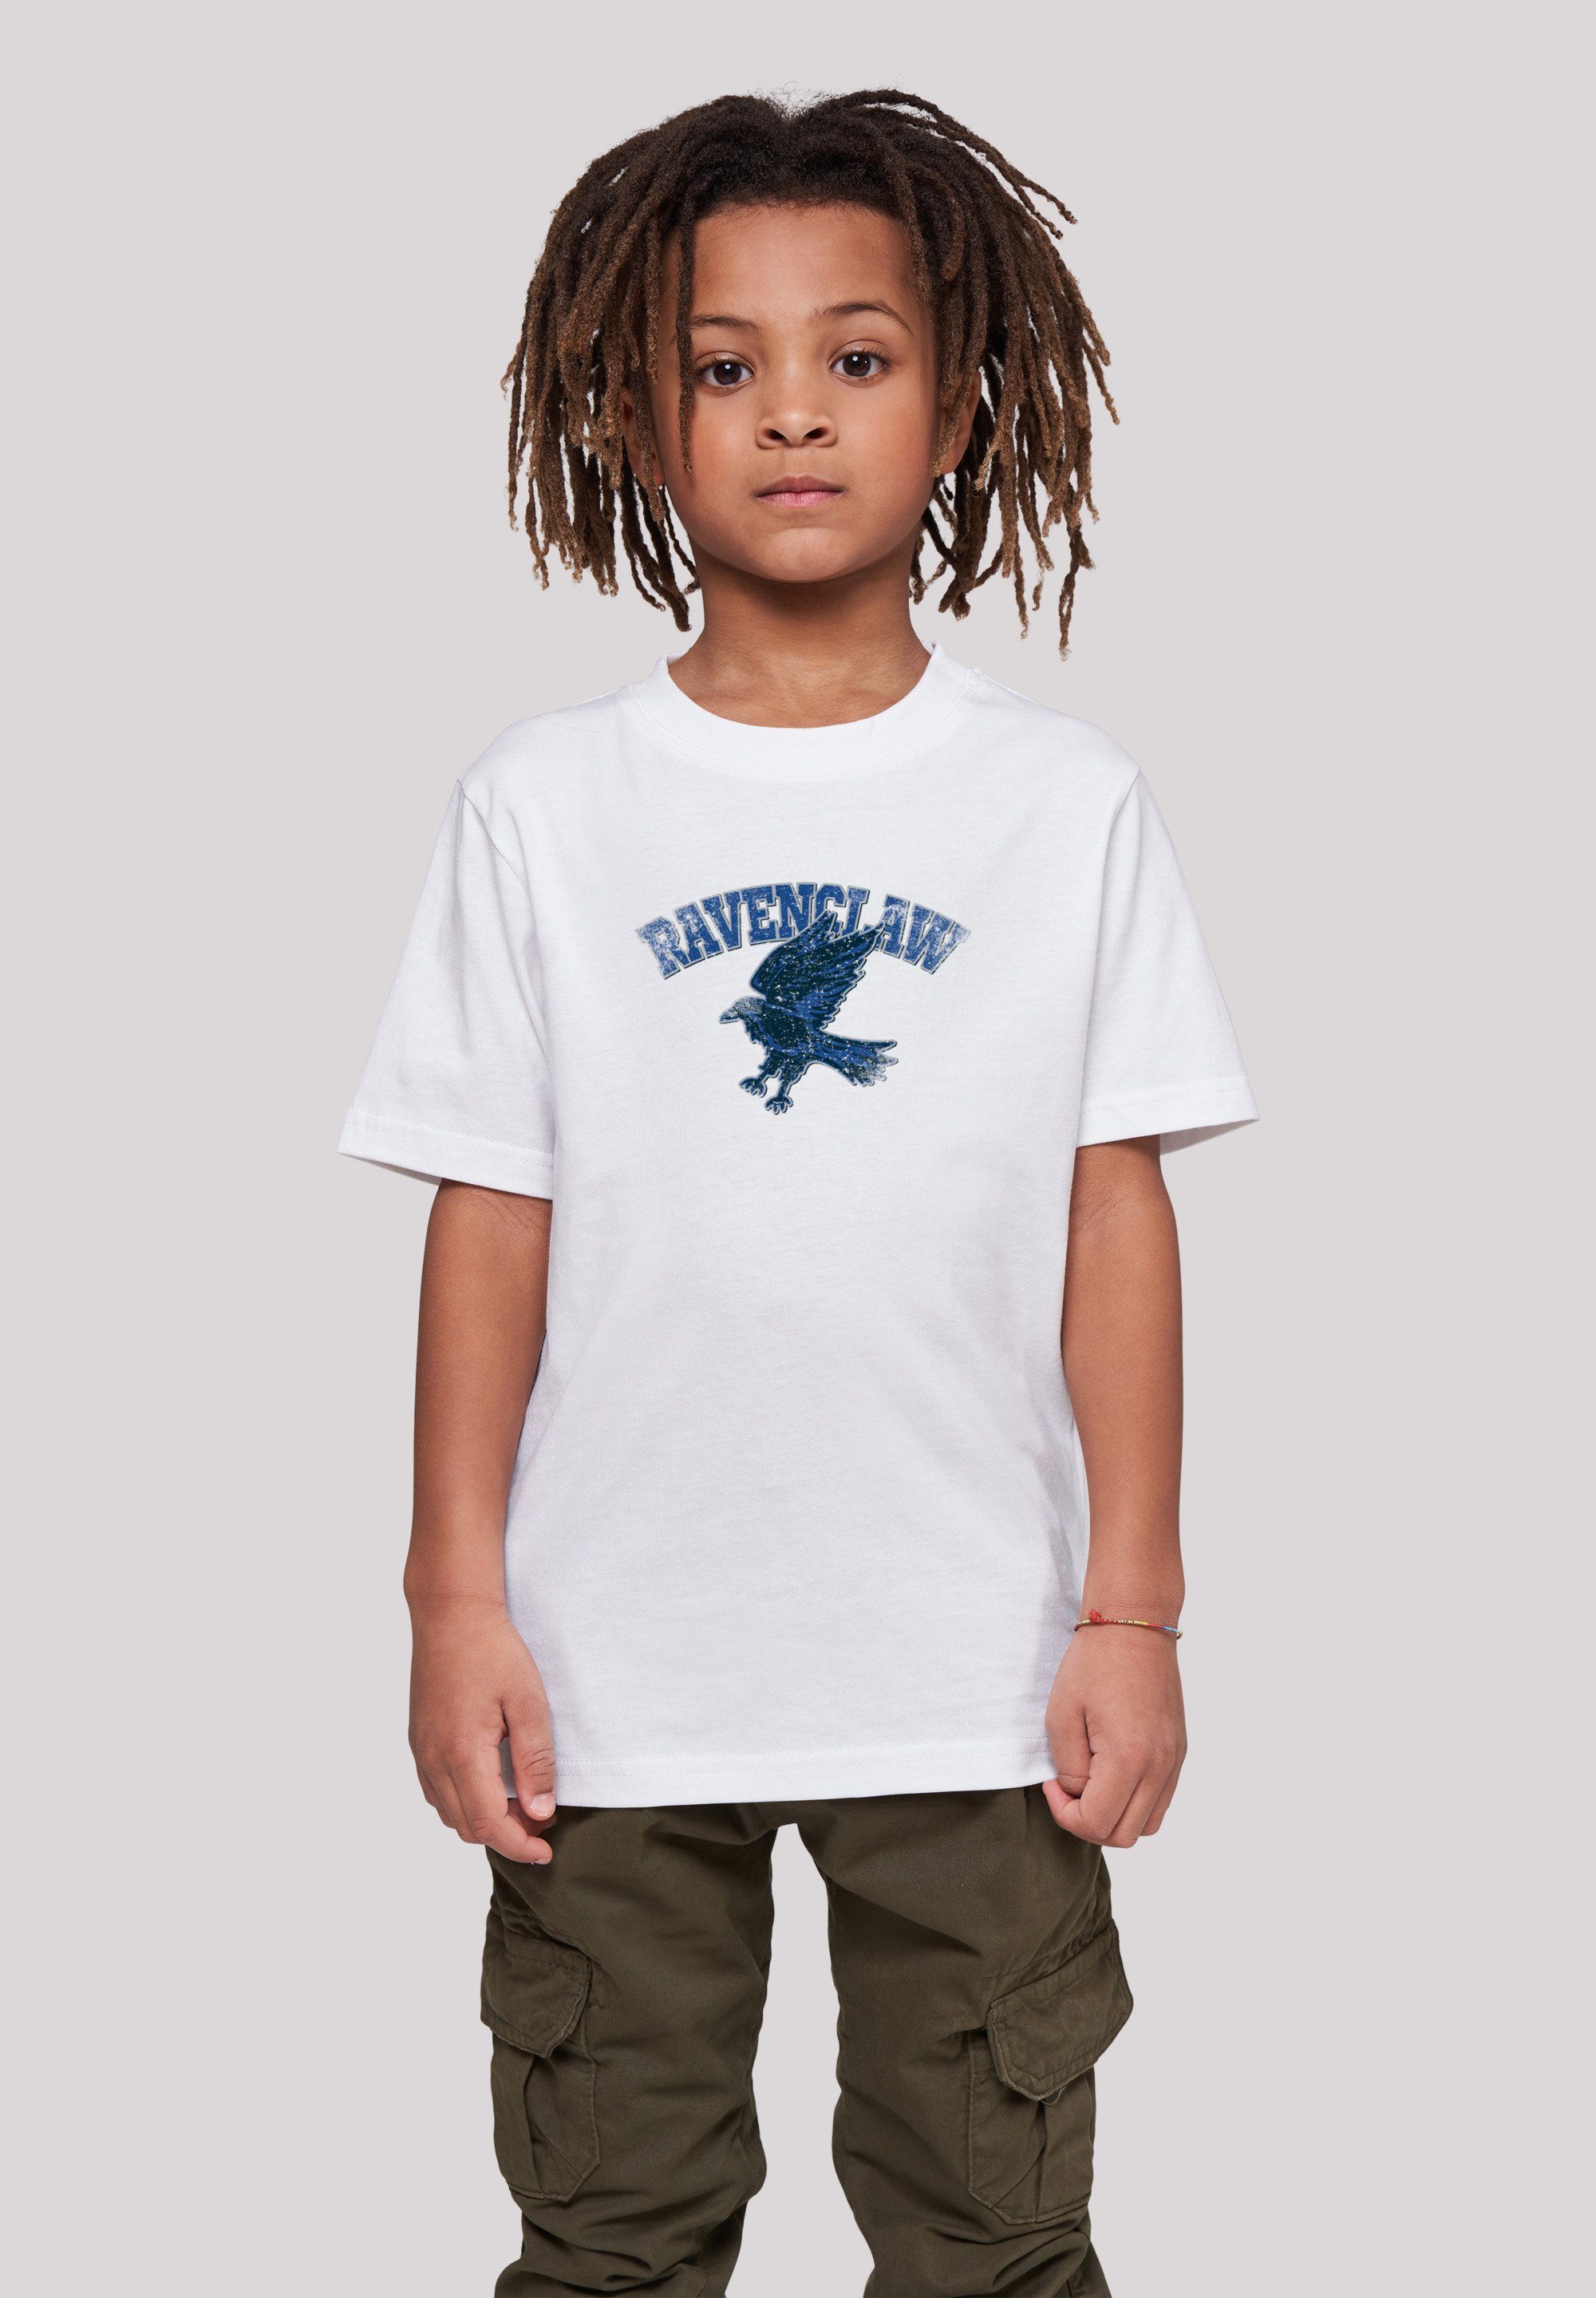 F4NT4STIC T-Shirt Harry Potter Ravenclaw Sehr hohem Tragekomfort mit weicher Print, Baumwollstoff Sport Emblem